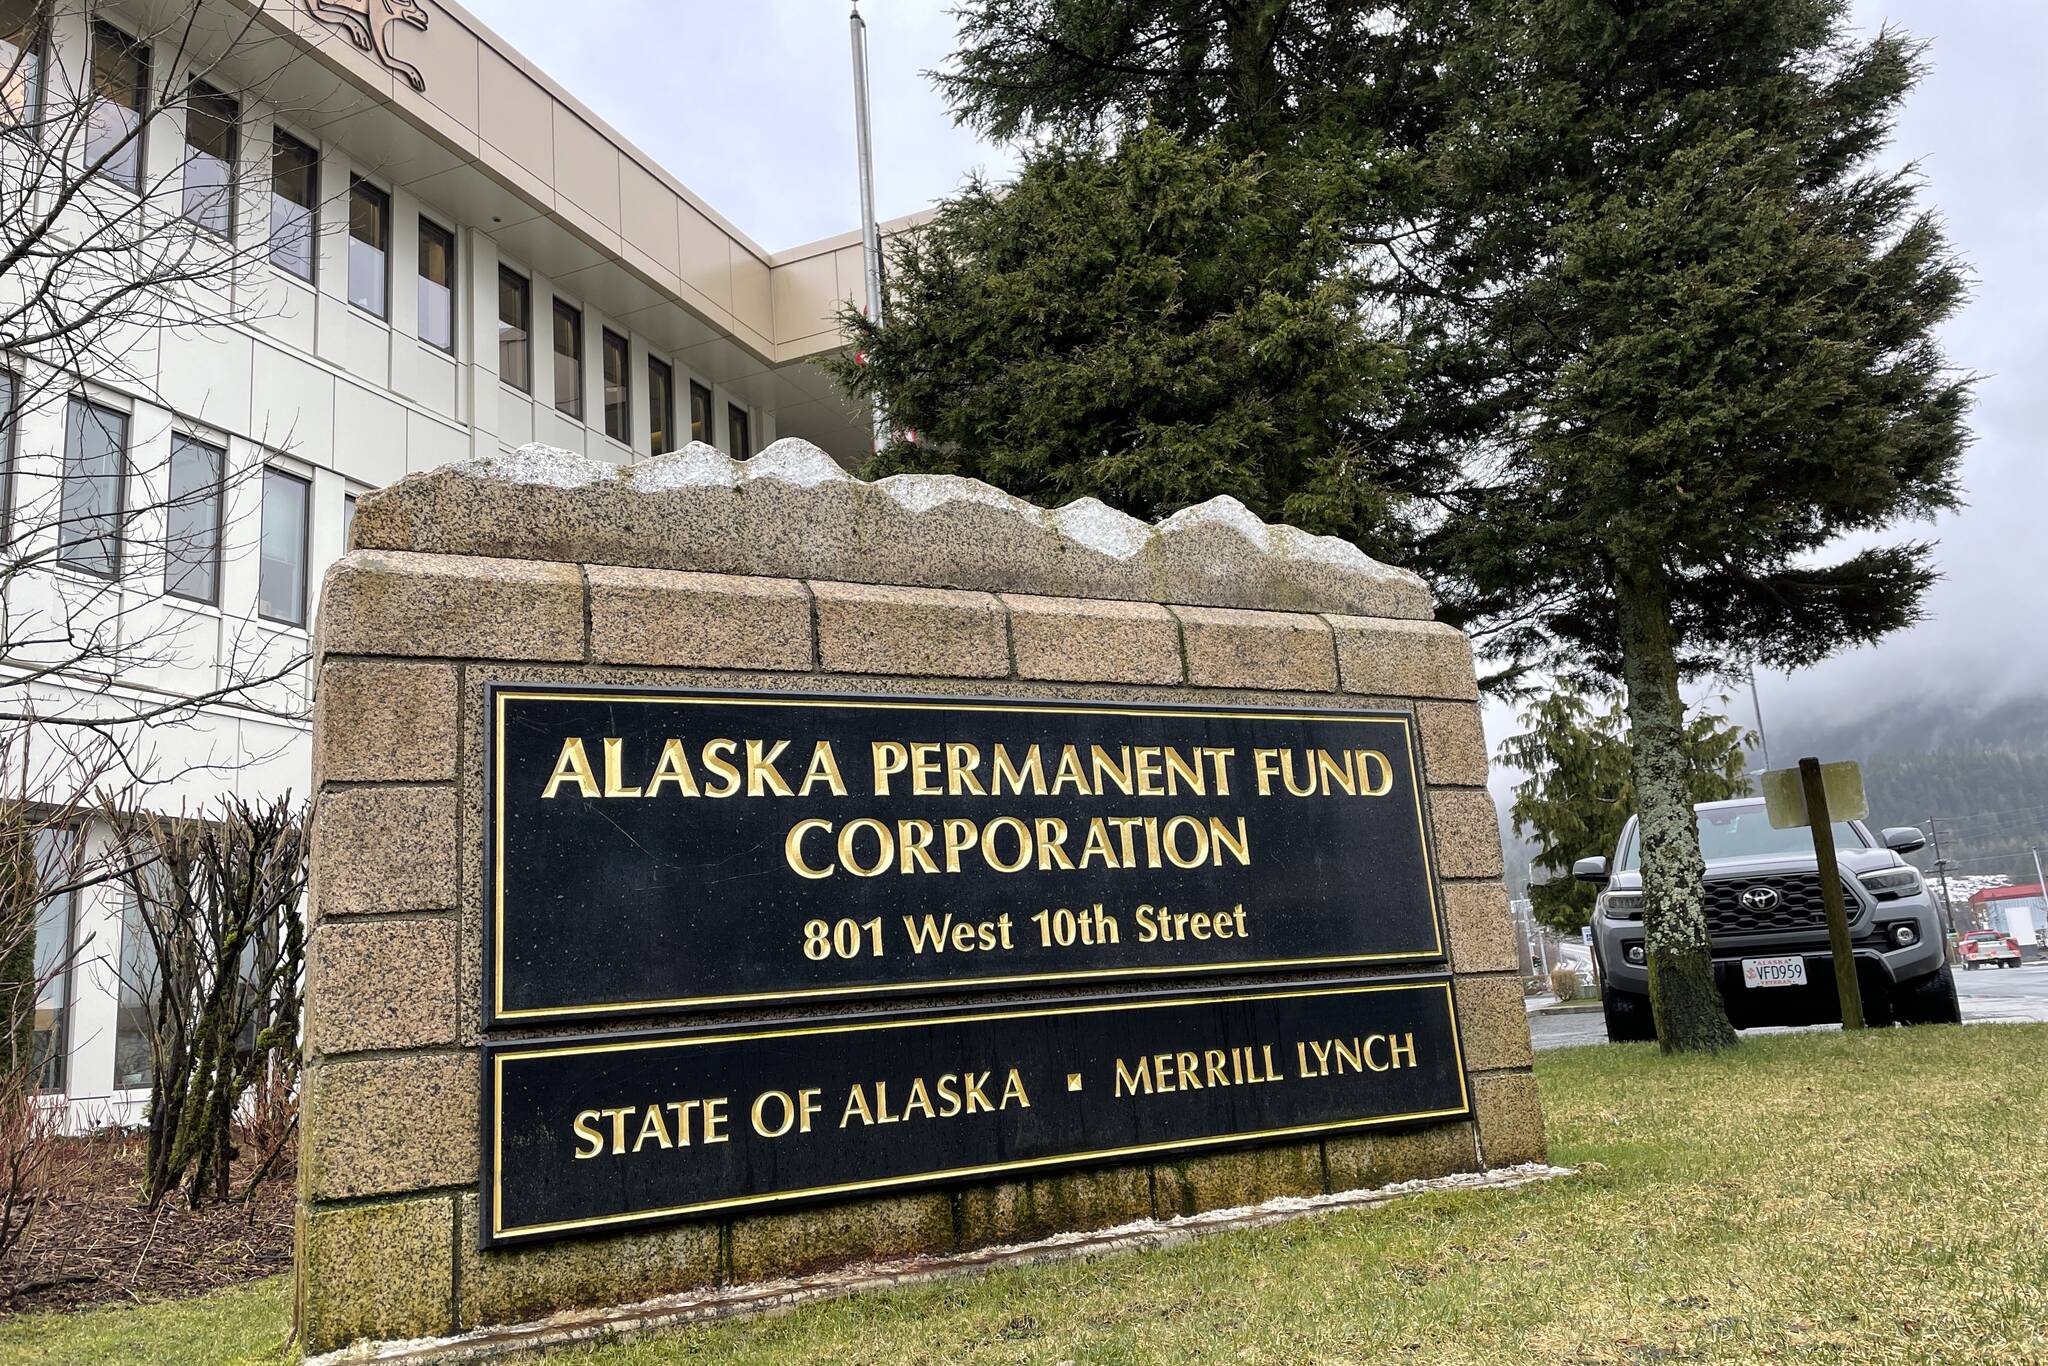 The Alaska Permanent Fund Corporation is seen in March 2022 in Juneau, Alaska. (Michael S. Lockett / Juneau Empire)